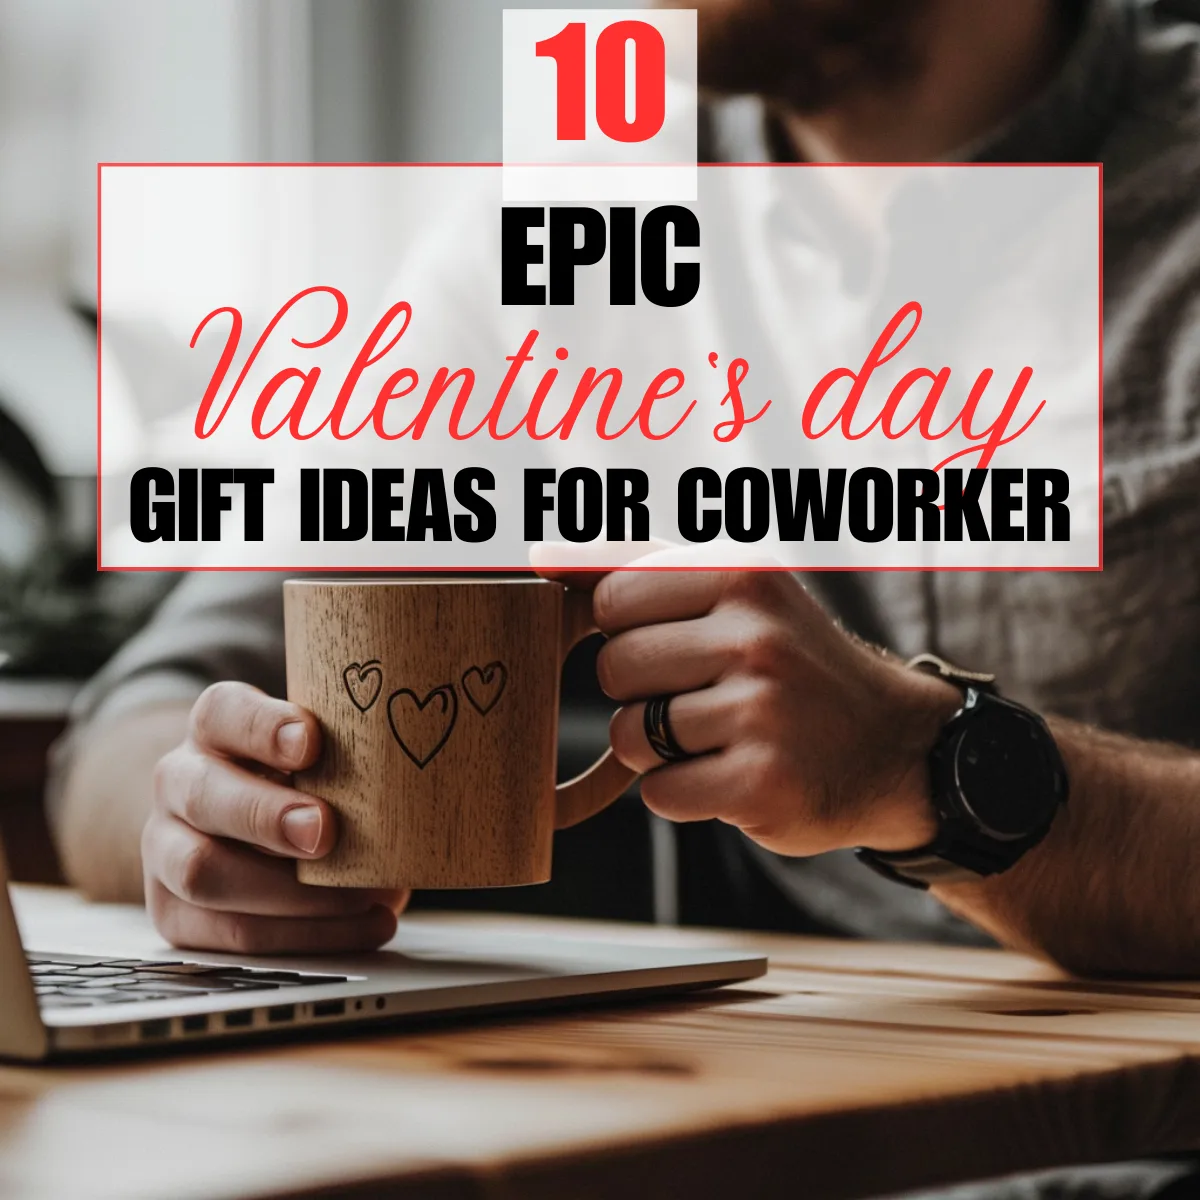 Wooden Valentine gift ideas for coworker